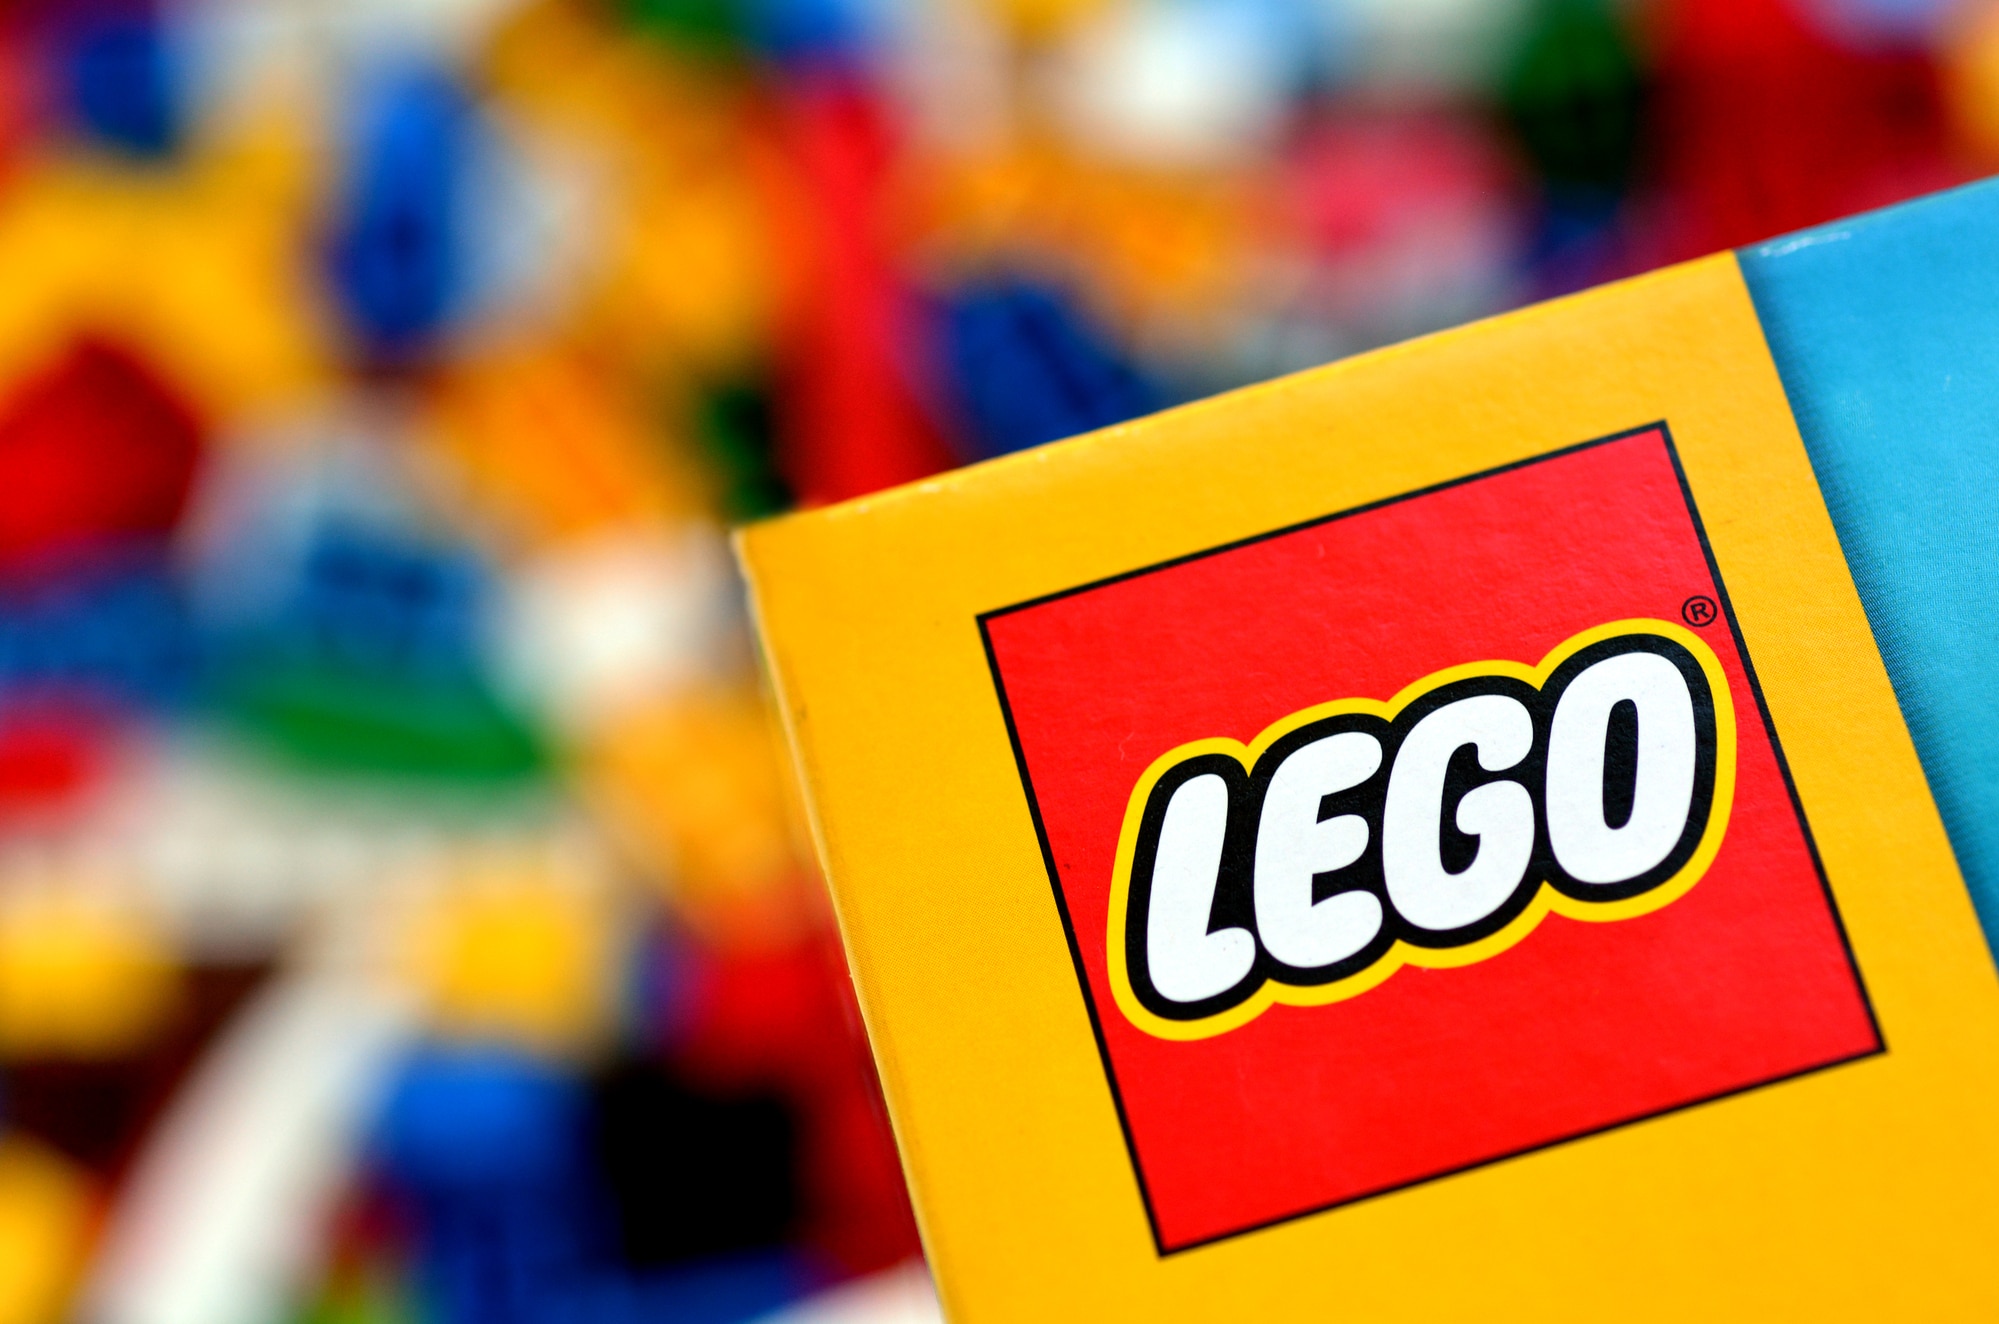 strubehoved Stranden Tung lastbil Lego SWOT Analysis 2021: Building Blocks of Success